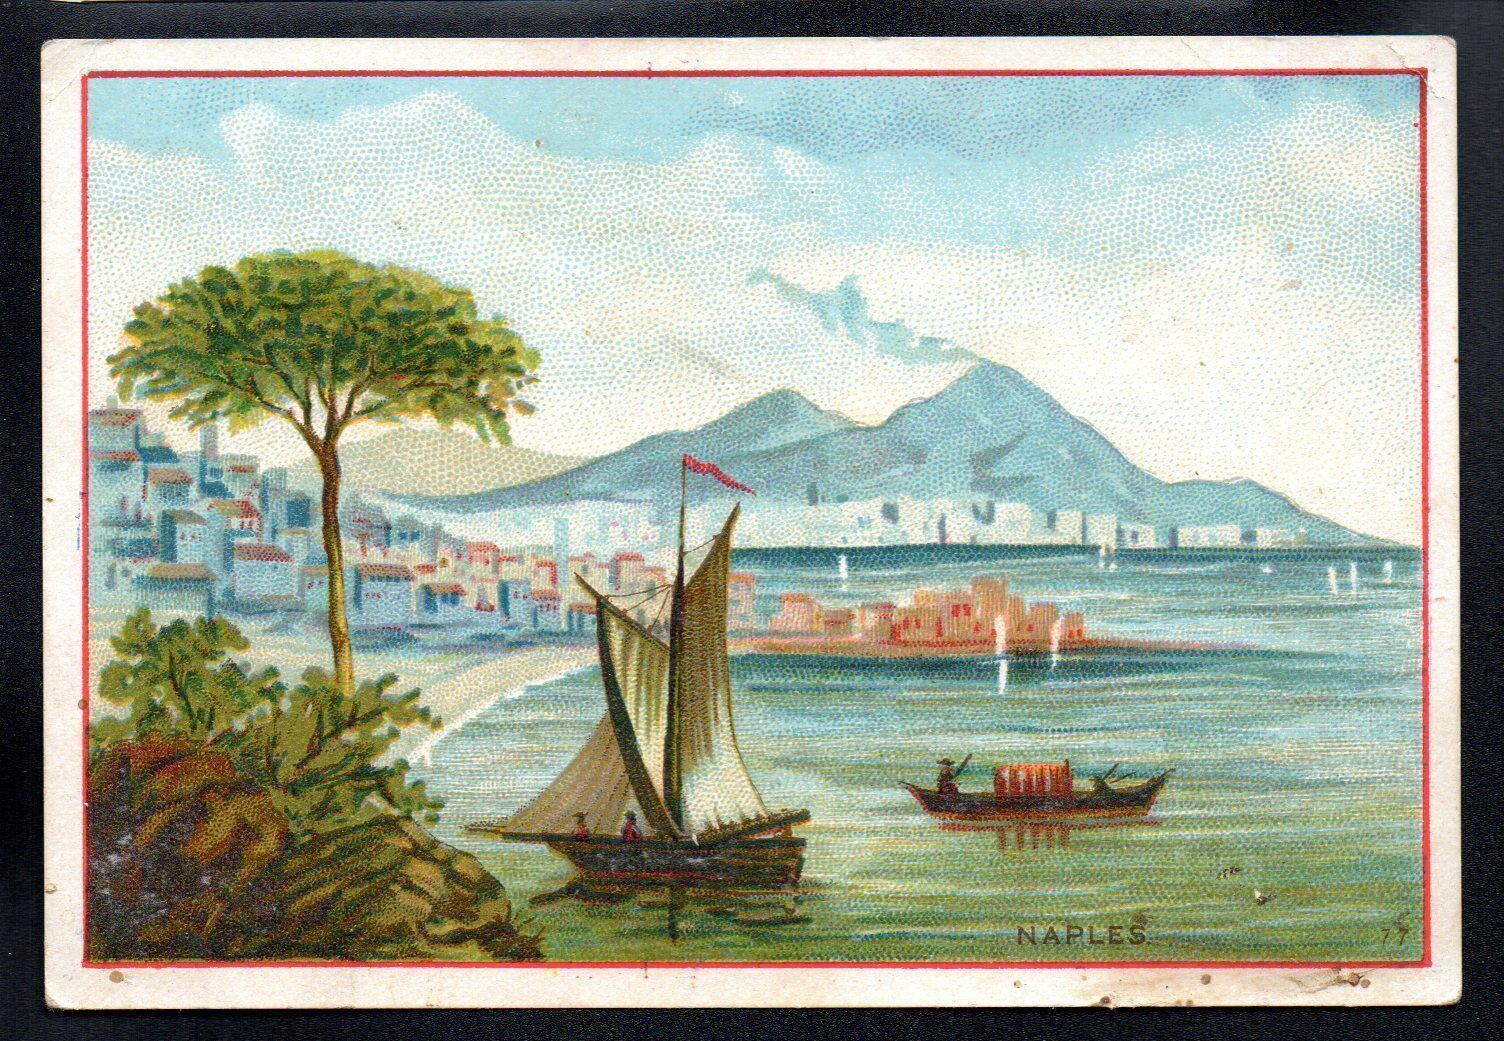 NAPLES ITALY 1880's VICTORIAN ADVERTISING TRADE CARD NO AD